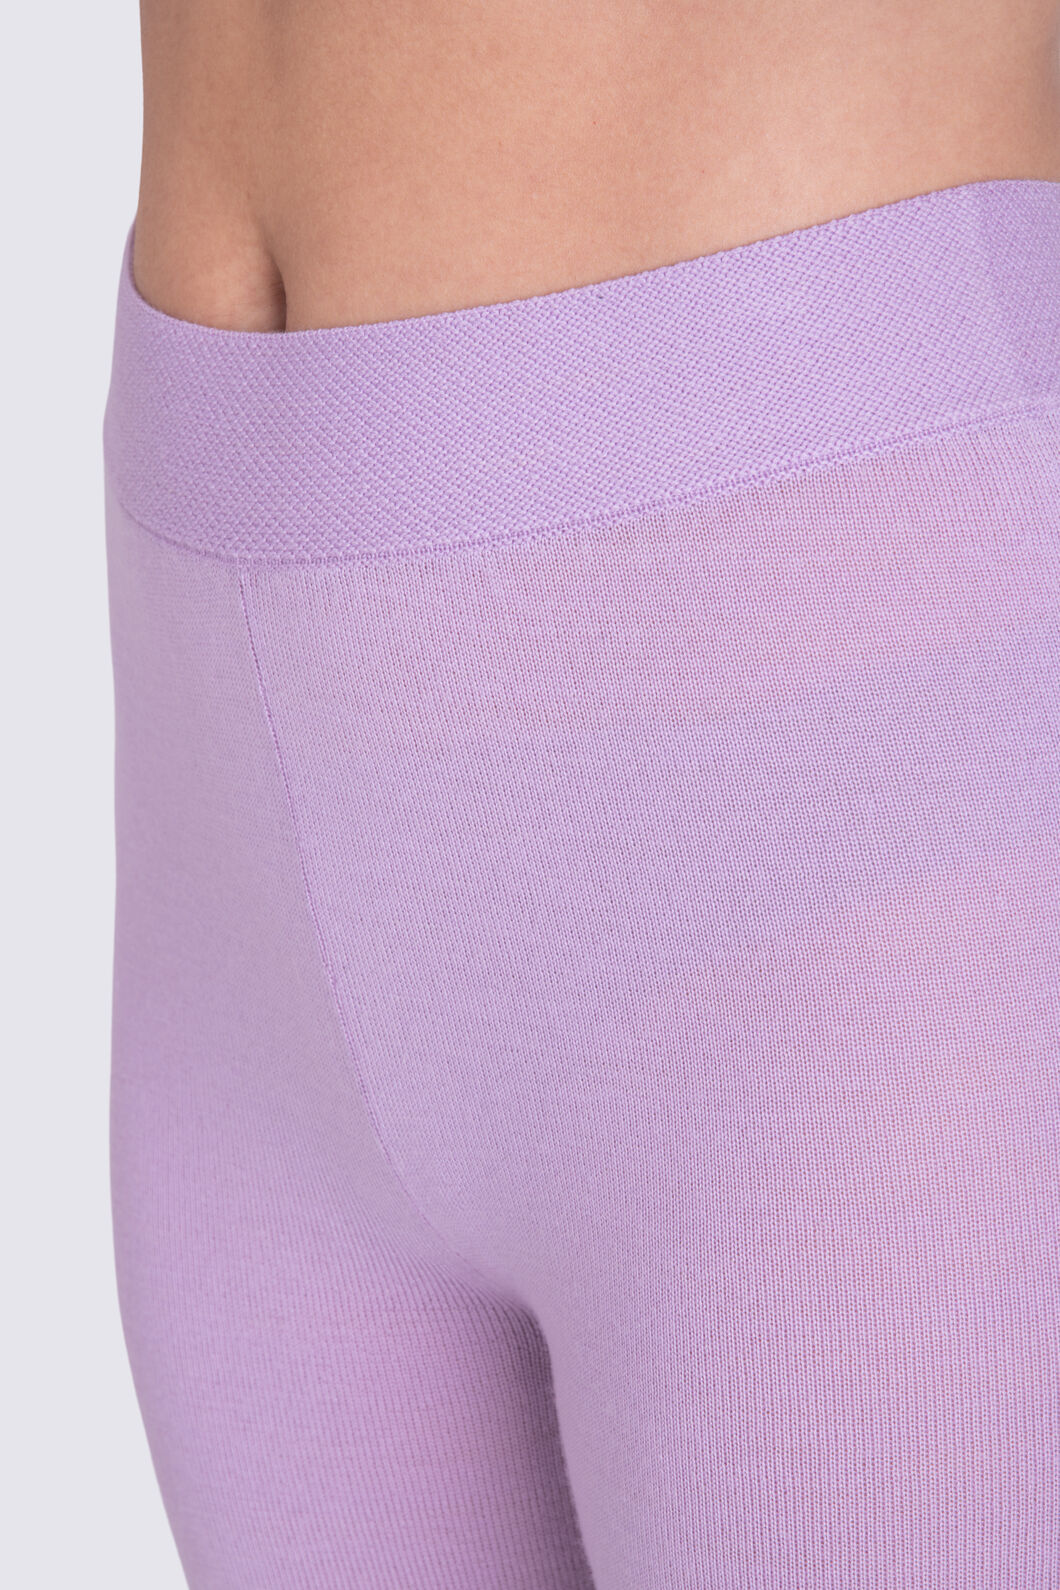 Shop Leggings for Women - LLB – tagged Curvy – Lavender Latte